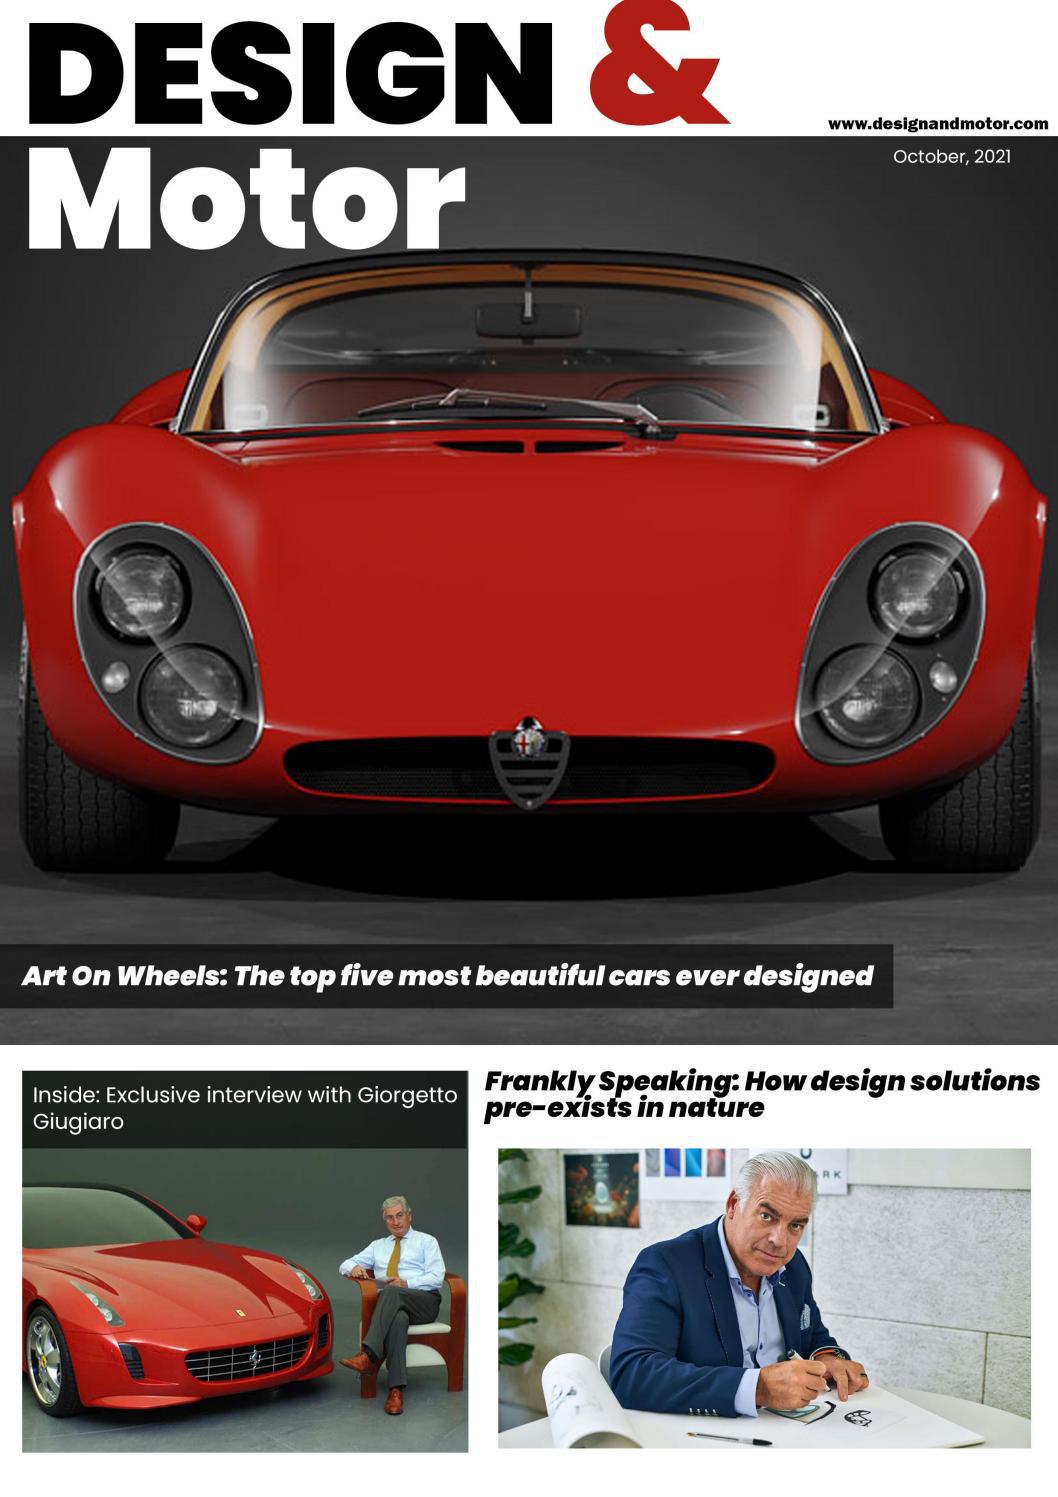 Design & Motor magazine